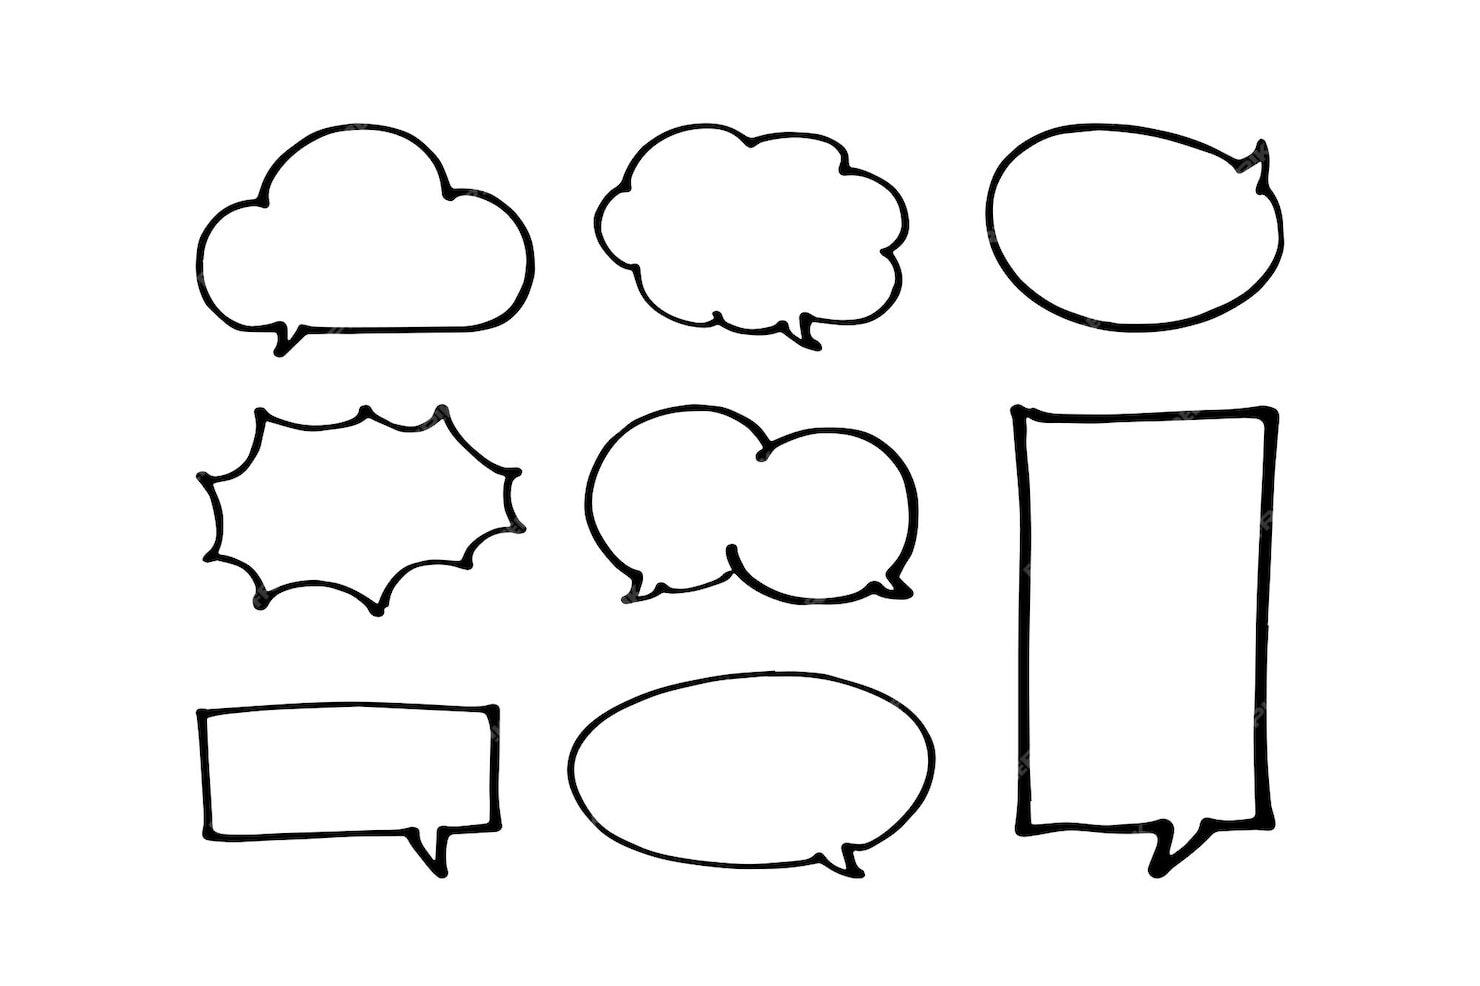 Premium Vector Set Of Hand Drawn Speech Bubbles Vector Illustration 7634